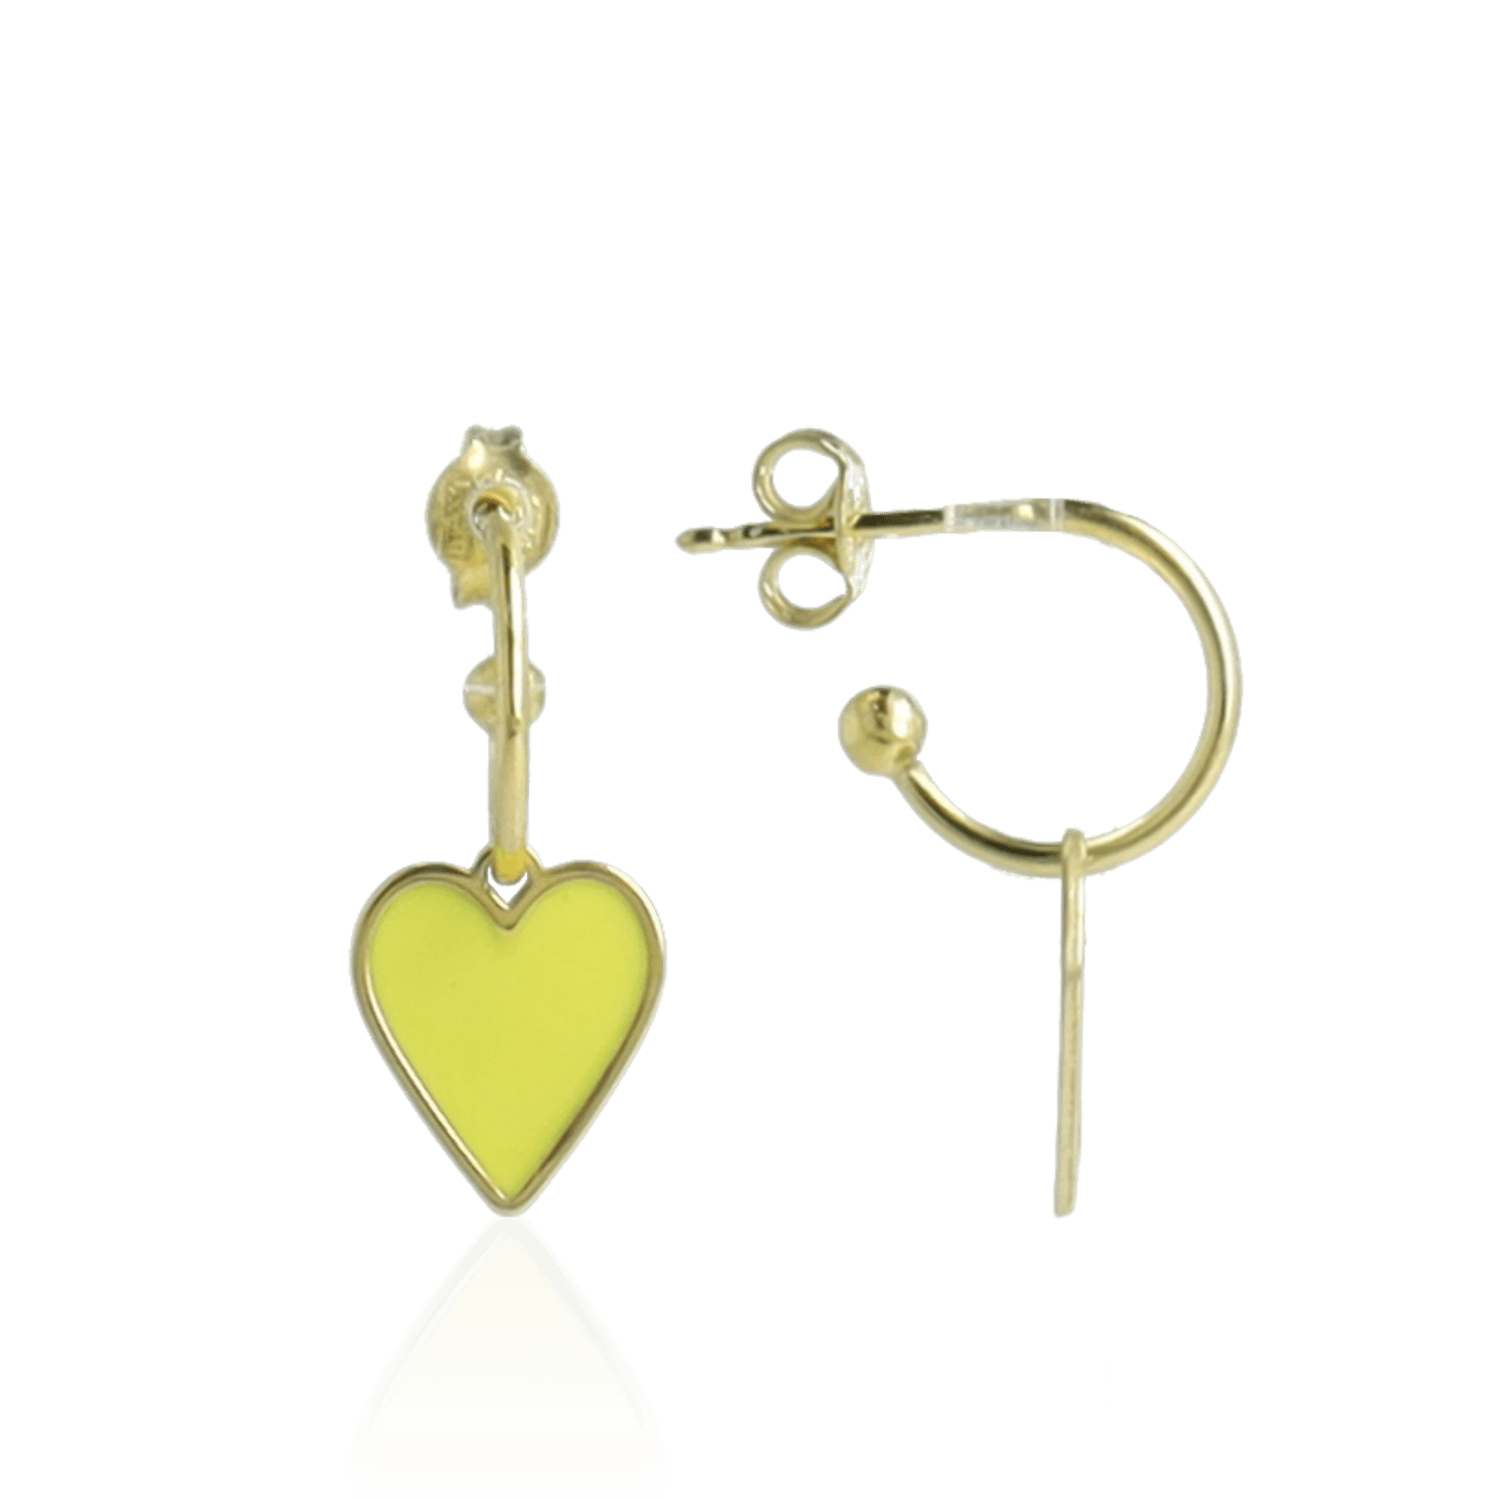 Symbol earrings heart pendant yellow